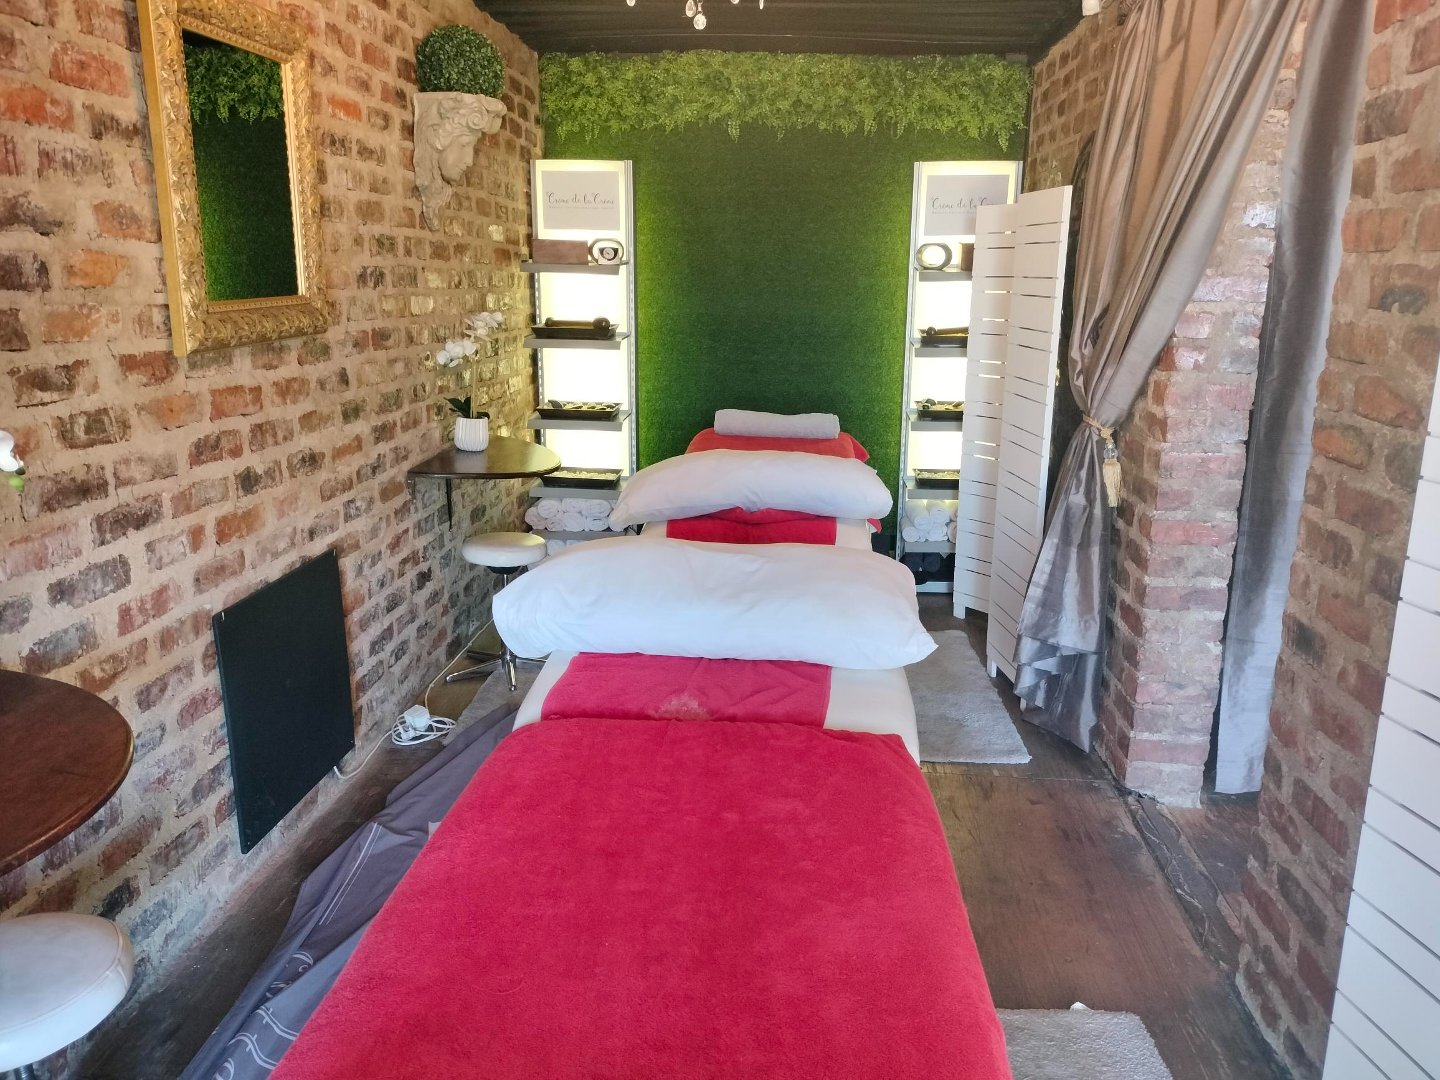  Bedroom Property for Sale in Dullstroom Mpumalanga